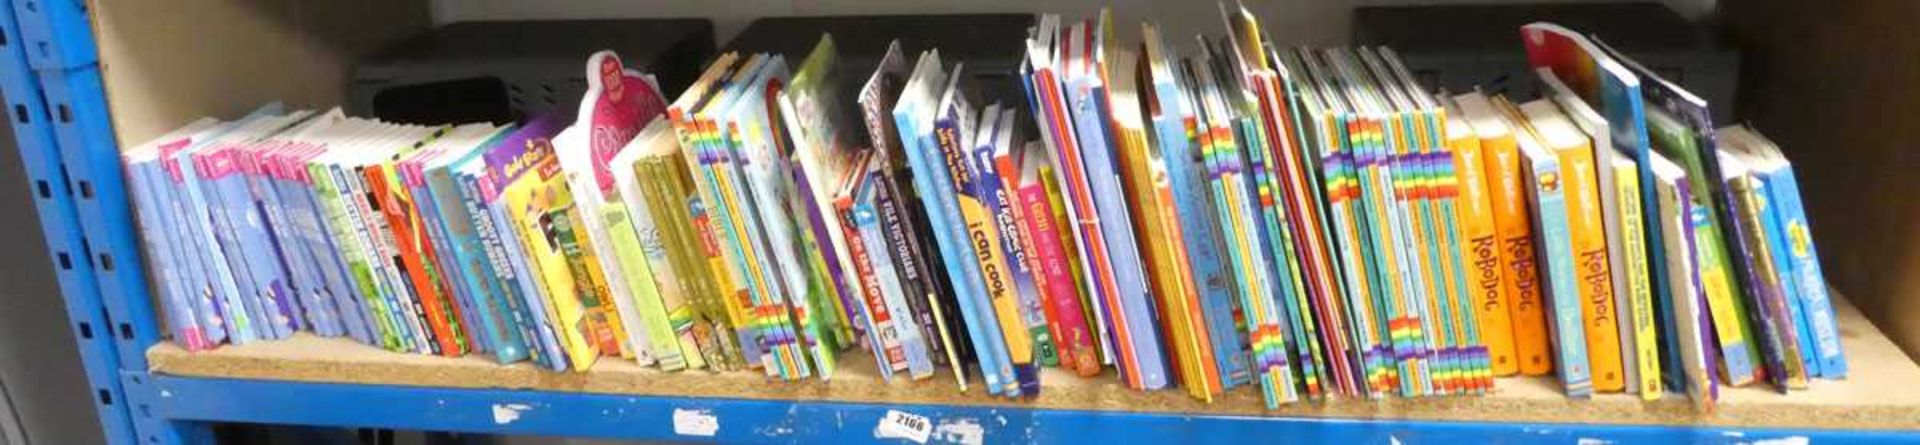 Half shelf of children's books